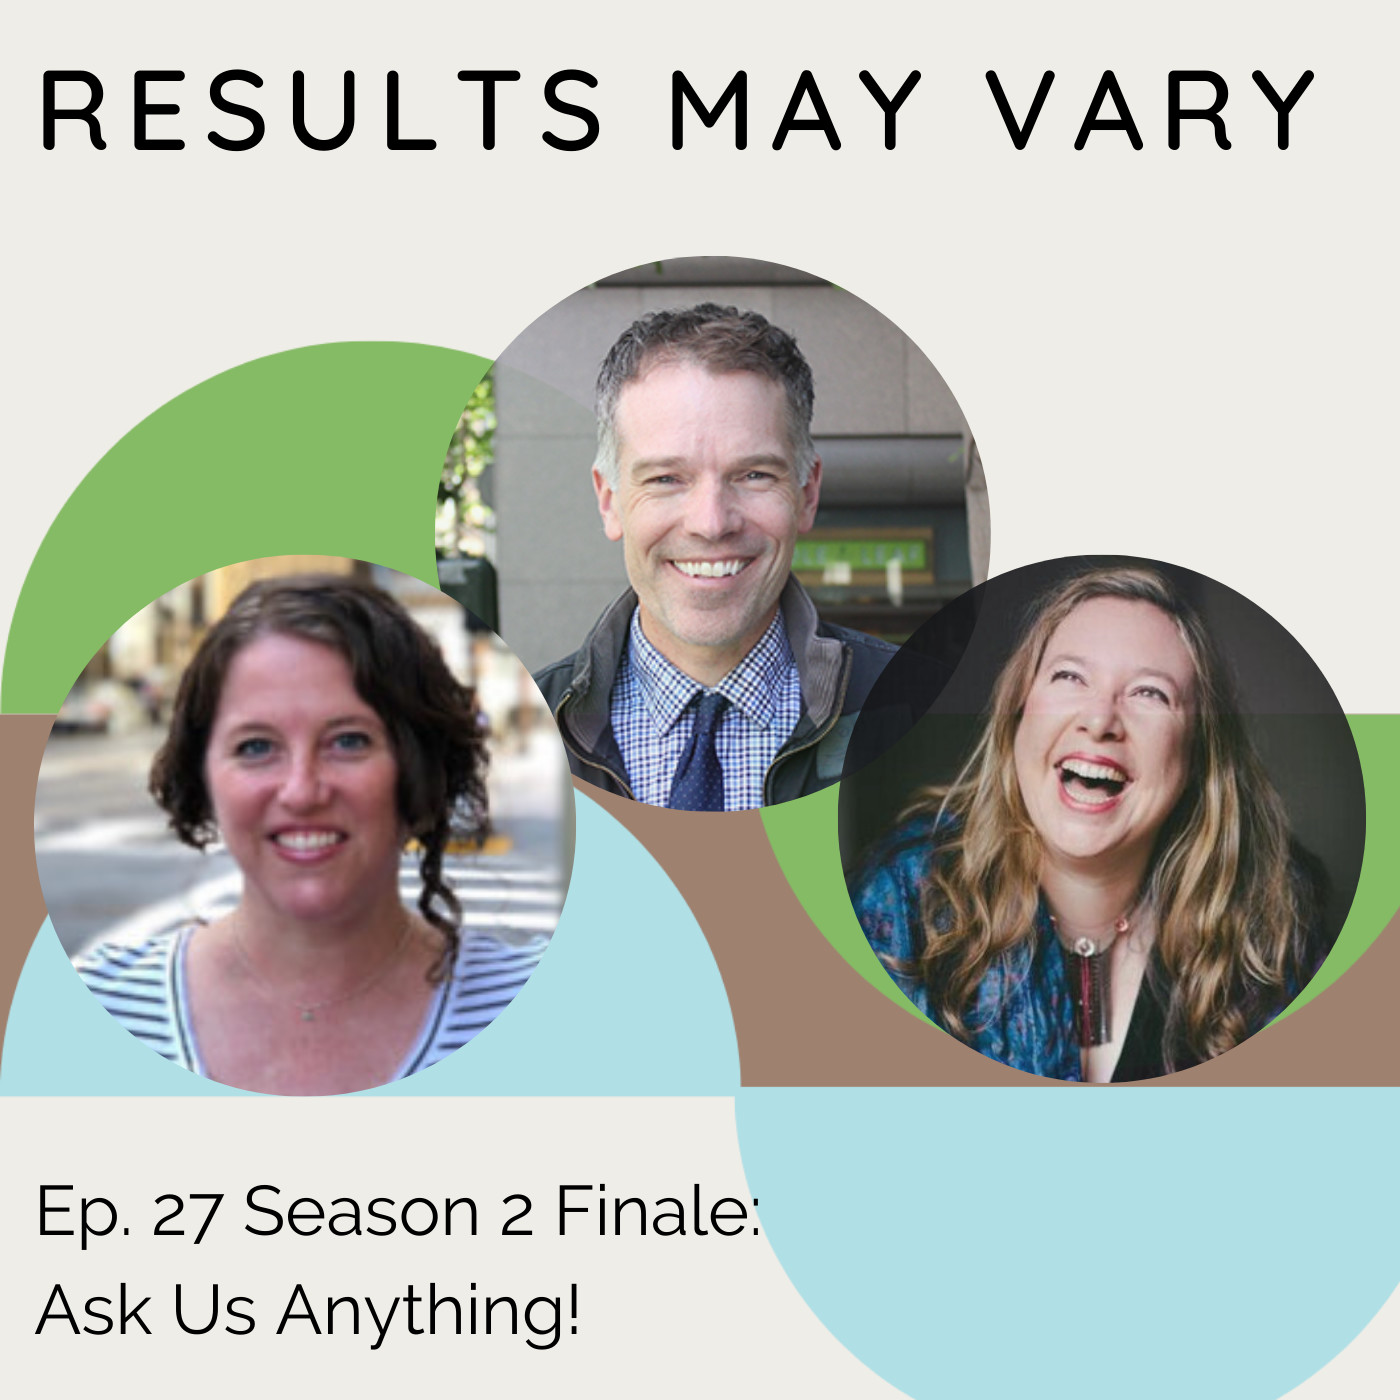 RMV 27 Season 2 Finale: Ask Us Anything!